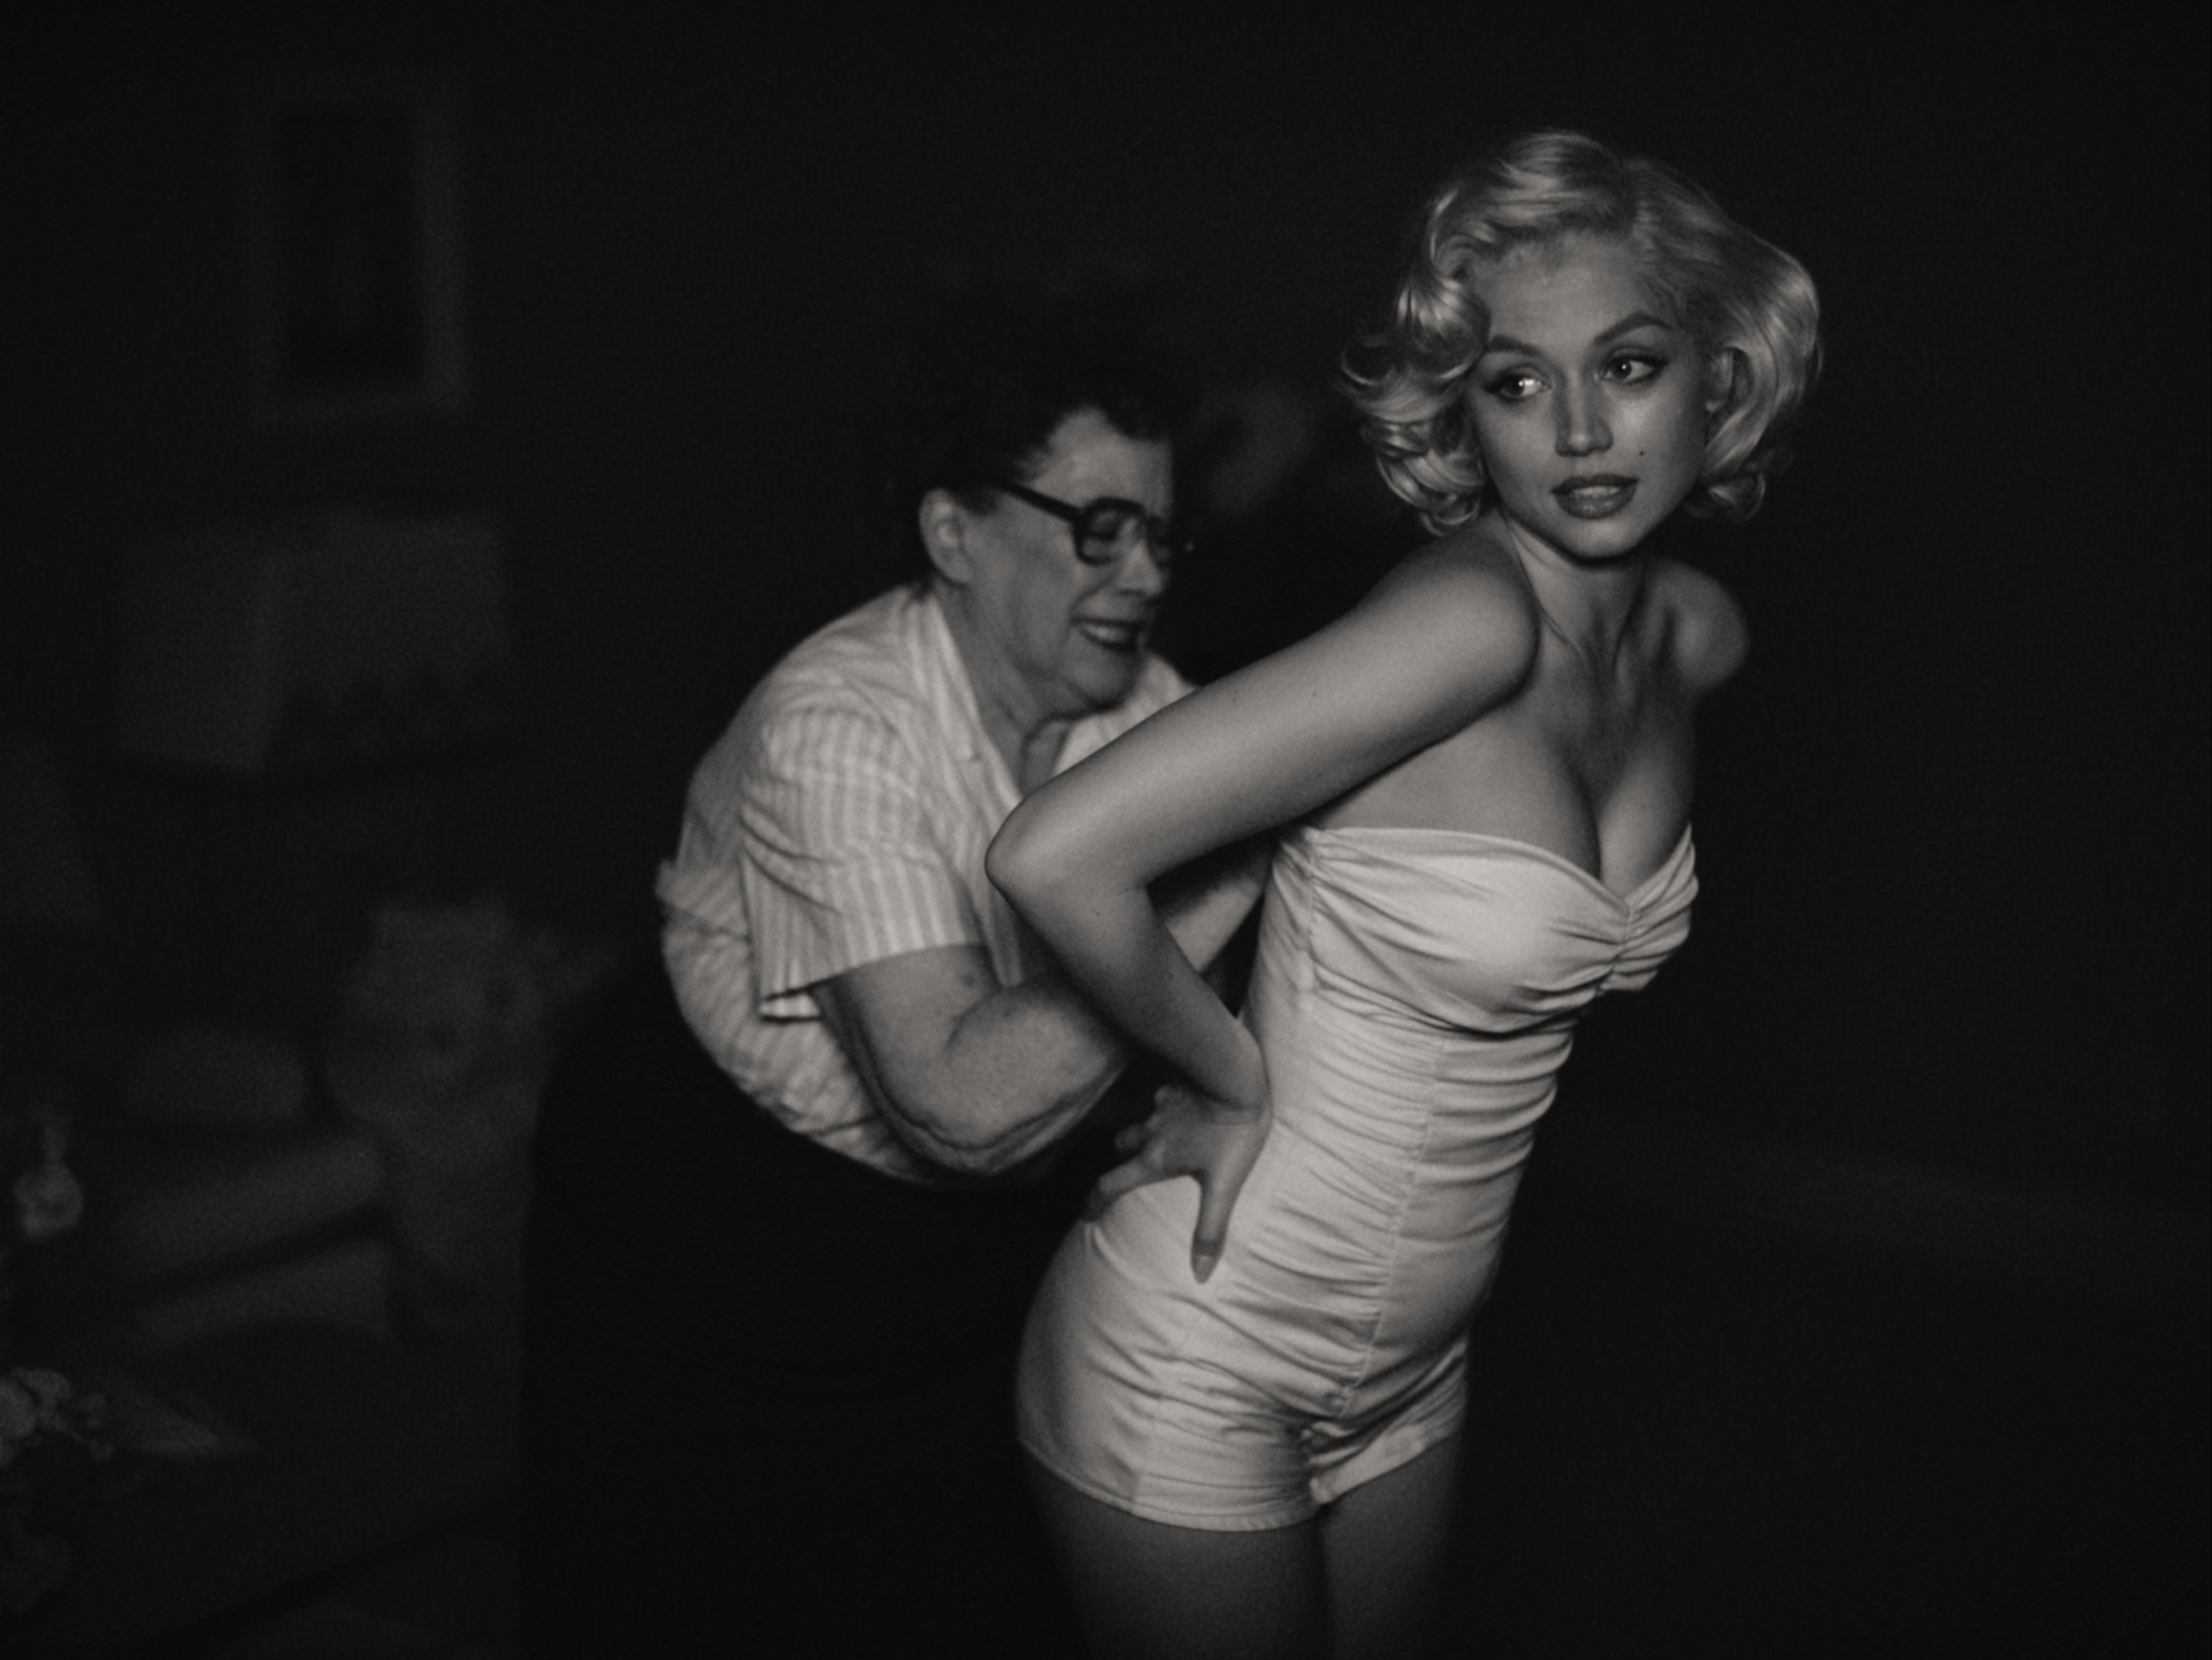 Blonde Tells the Story of Marilyn Monroe Through Costume